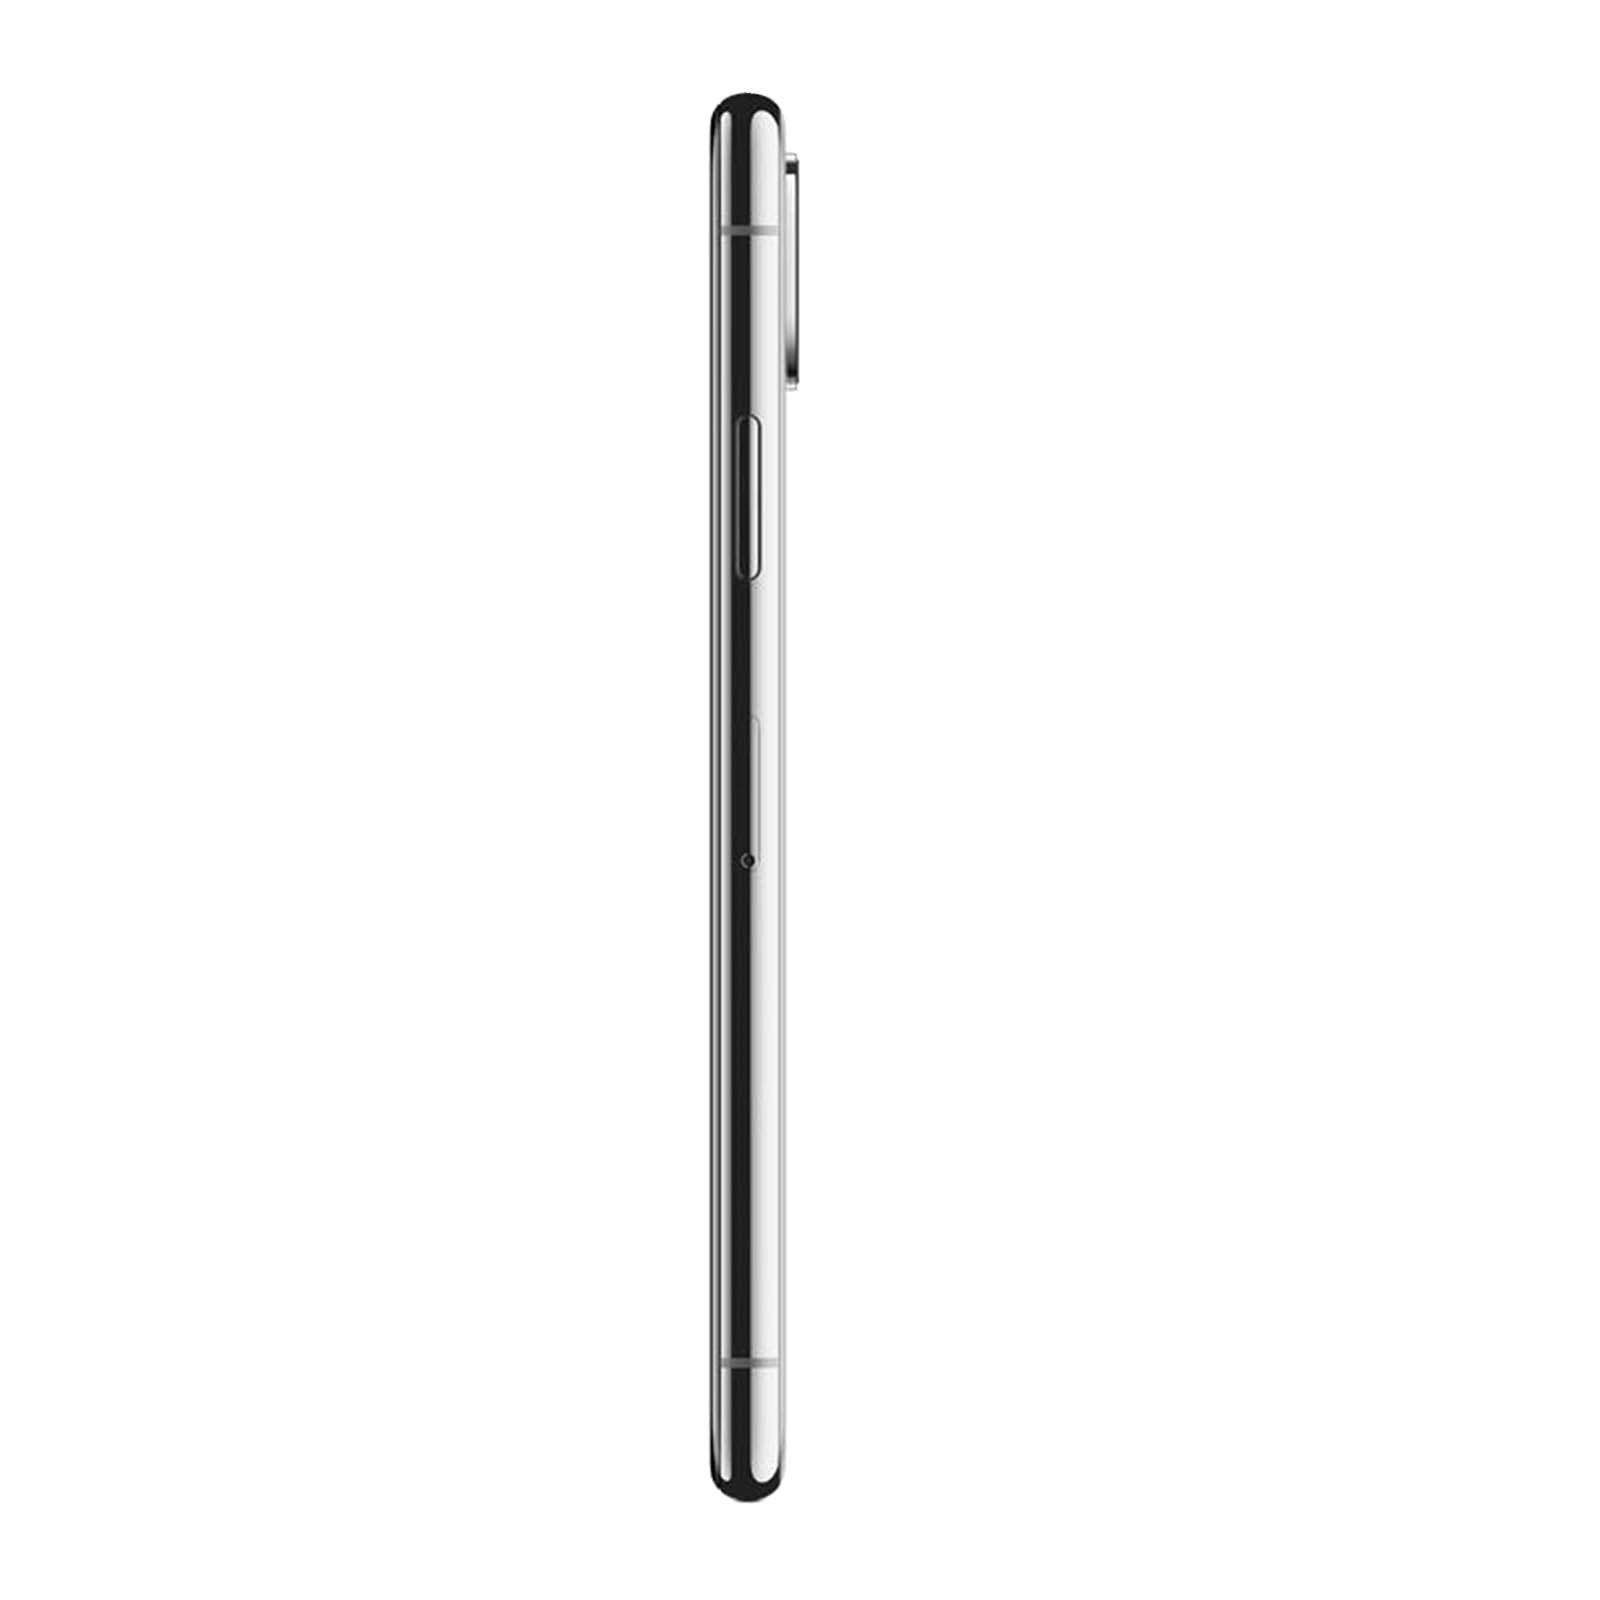 Apple iPhone XS 256GB Silver Pristine - AT&T